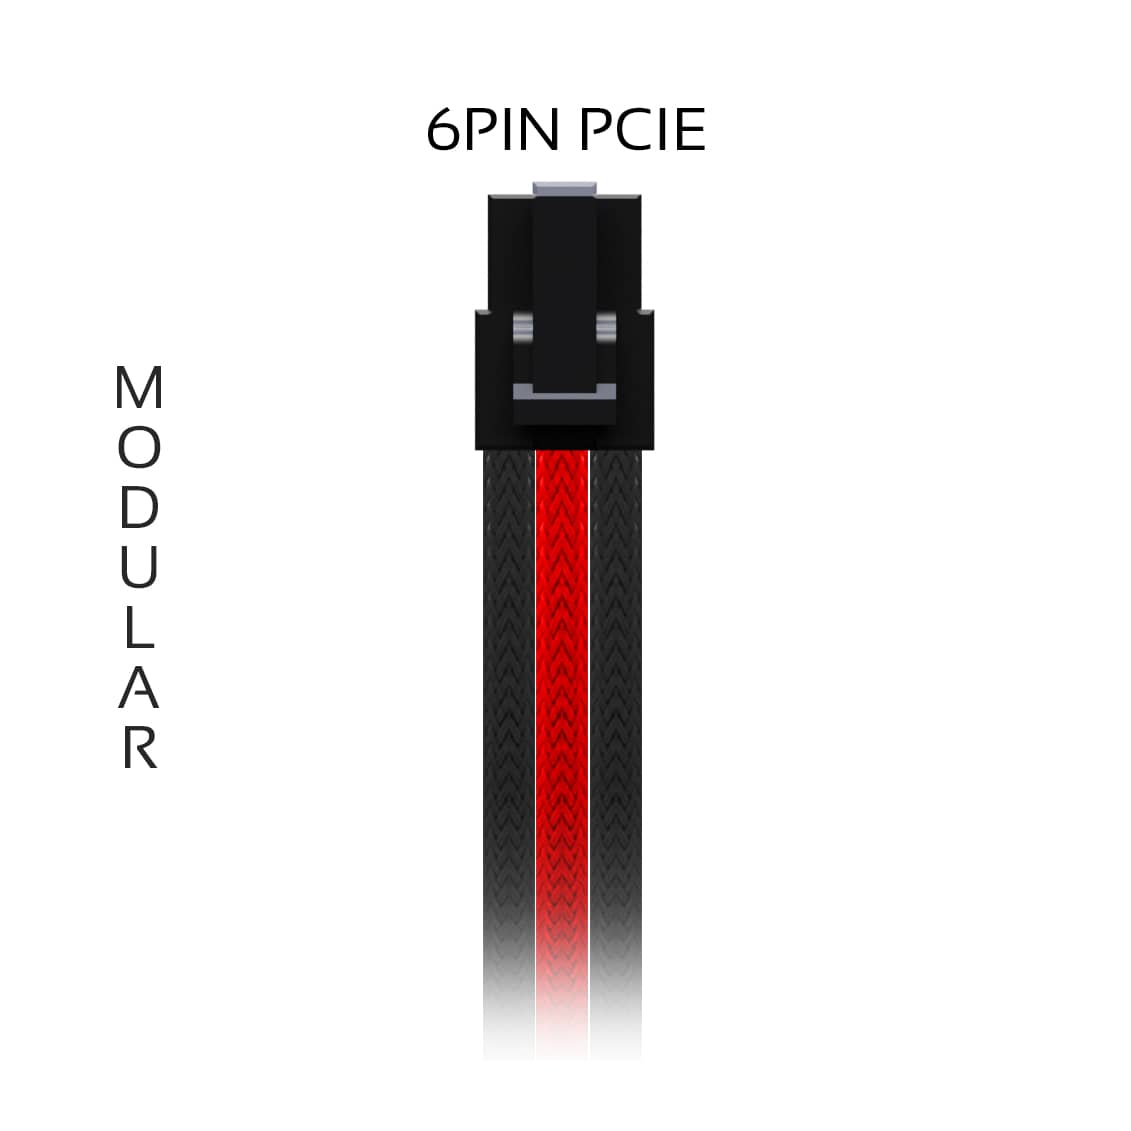 6pin-pcie-modular